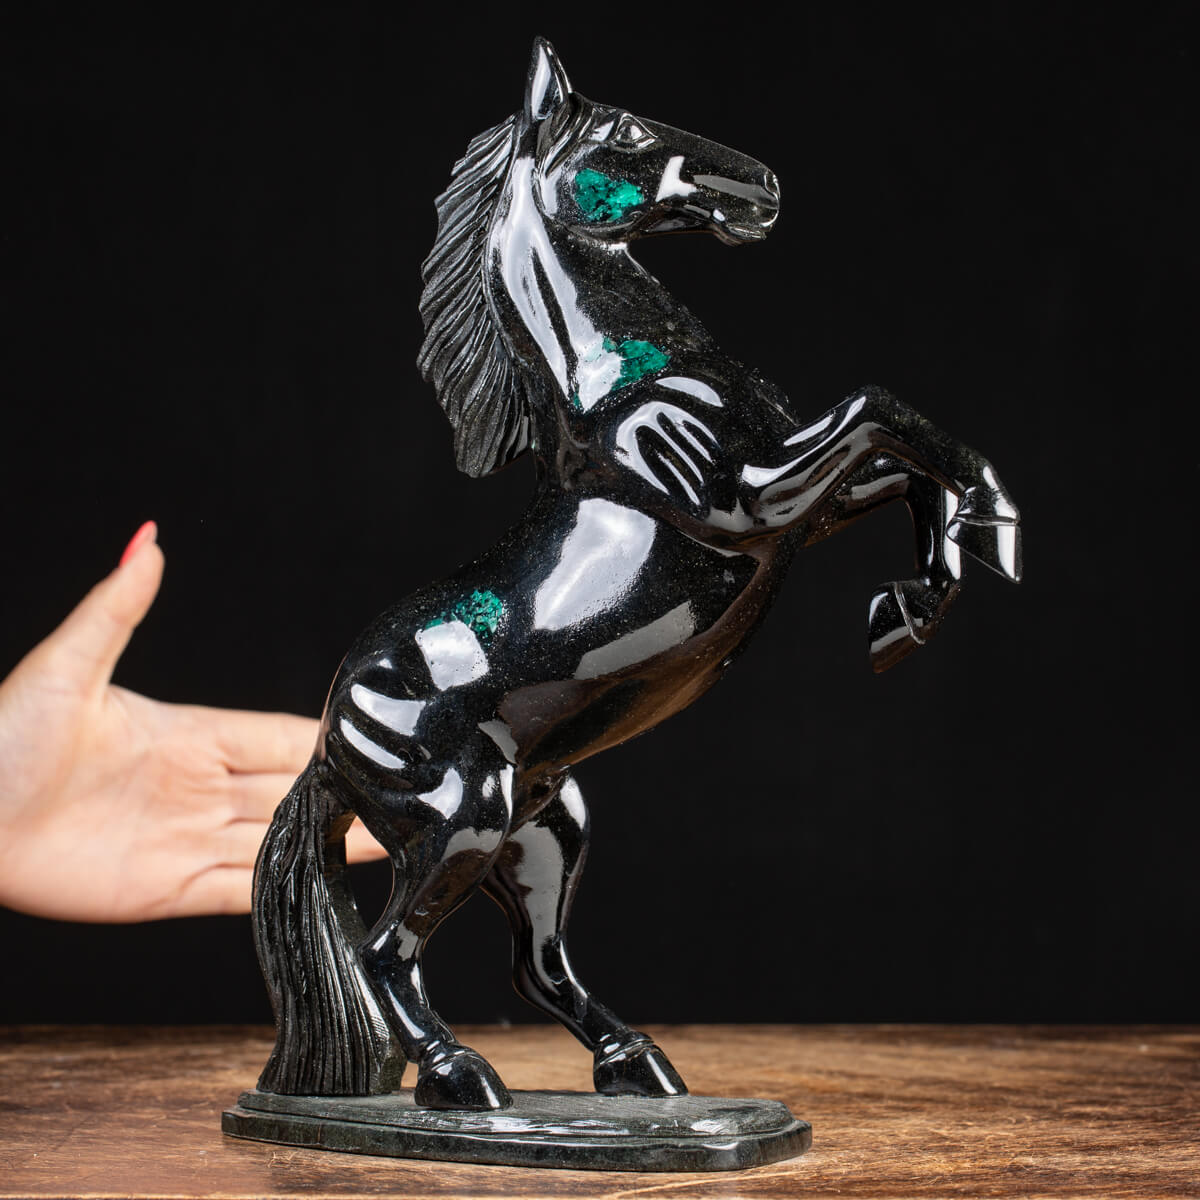 Emerald and black Schist horse sculpture